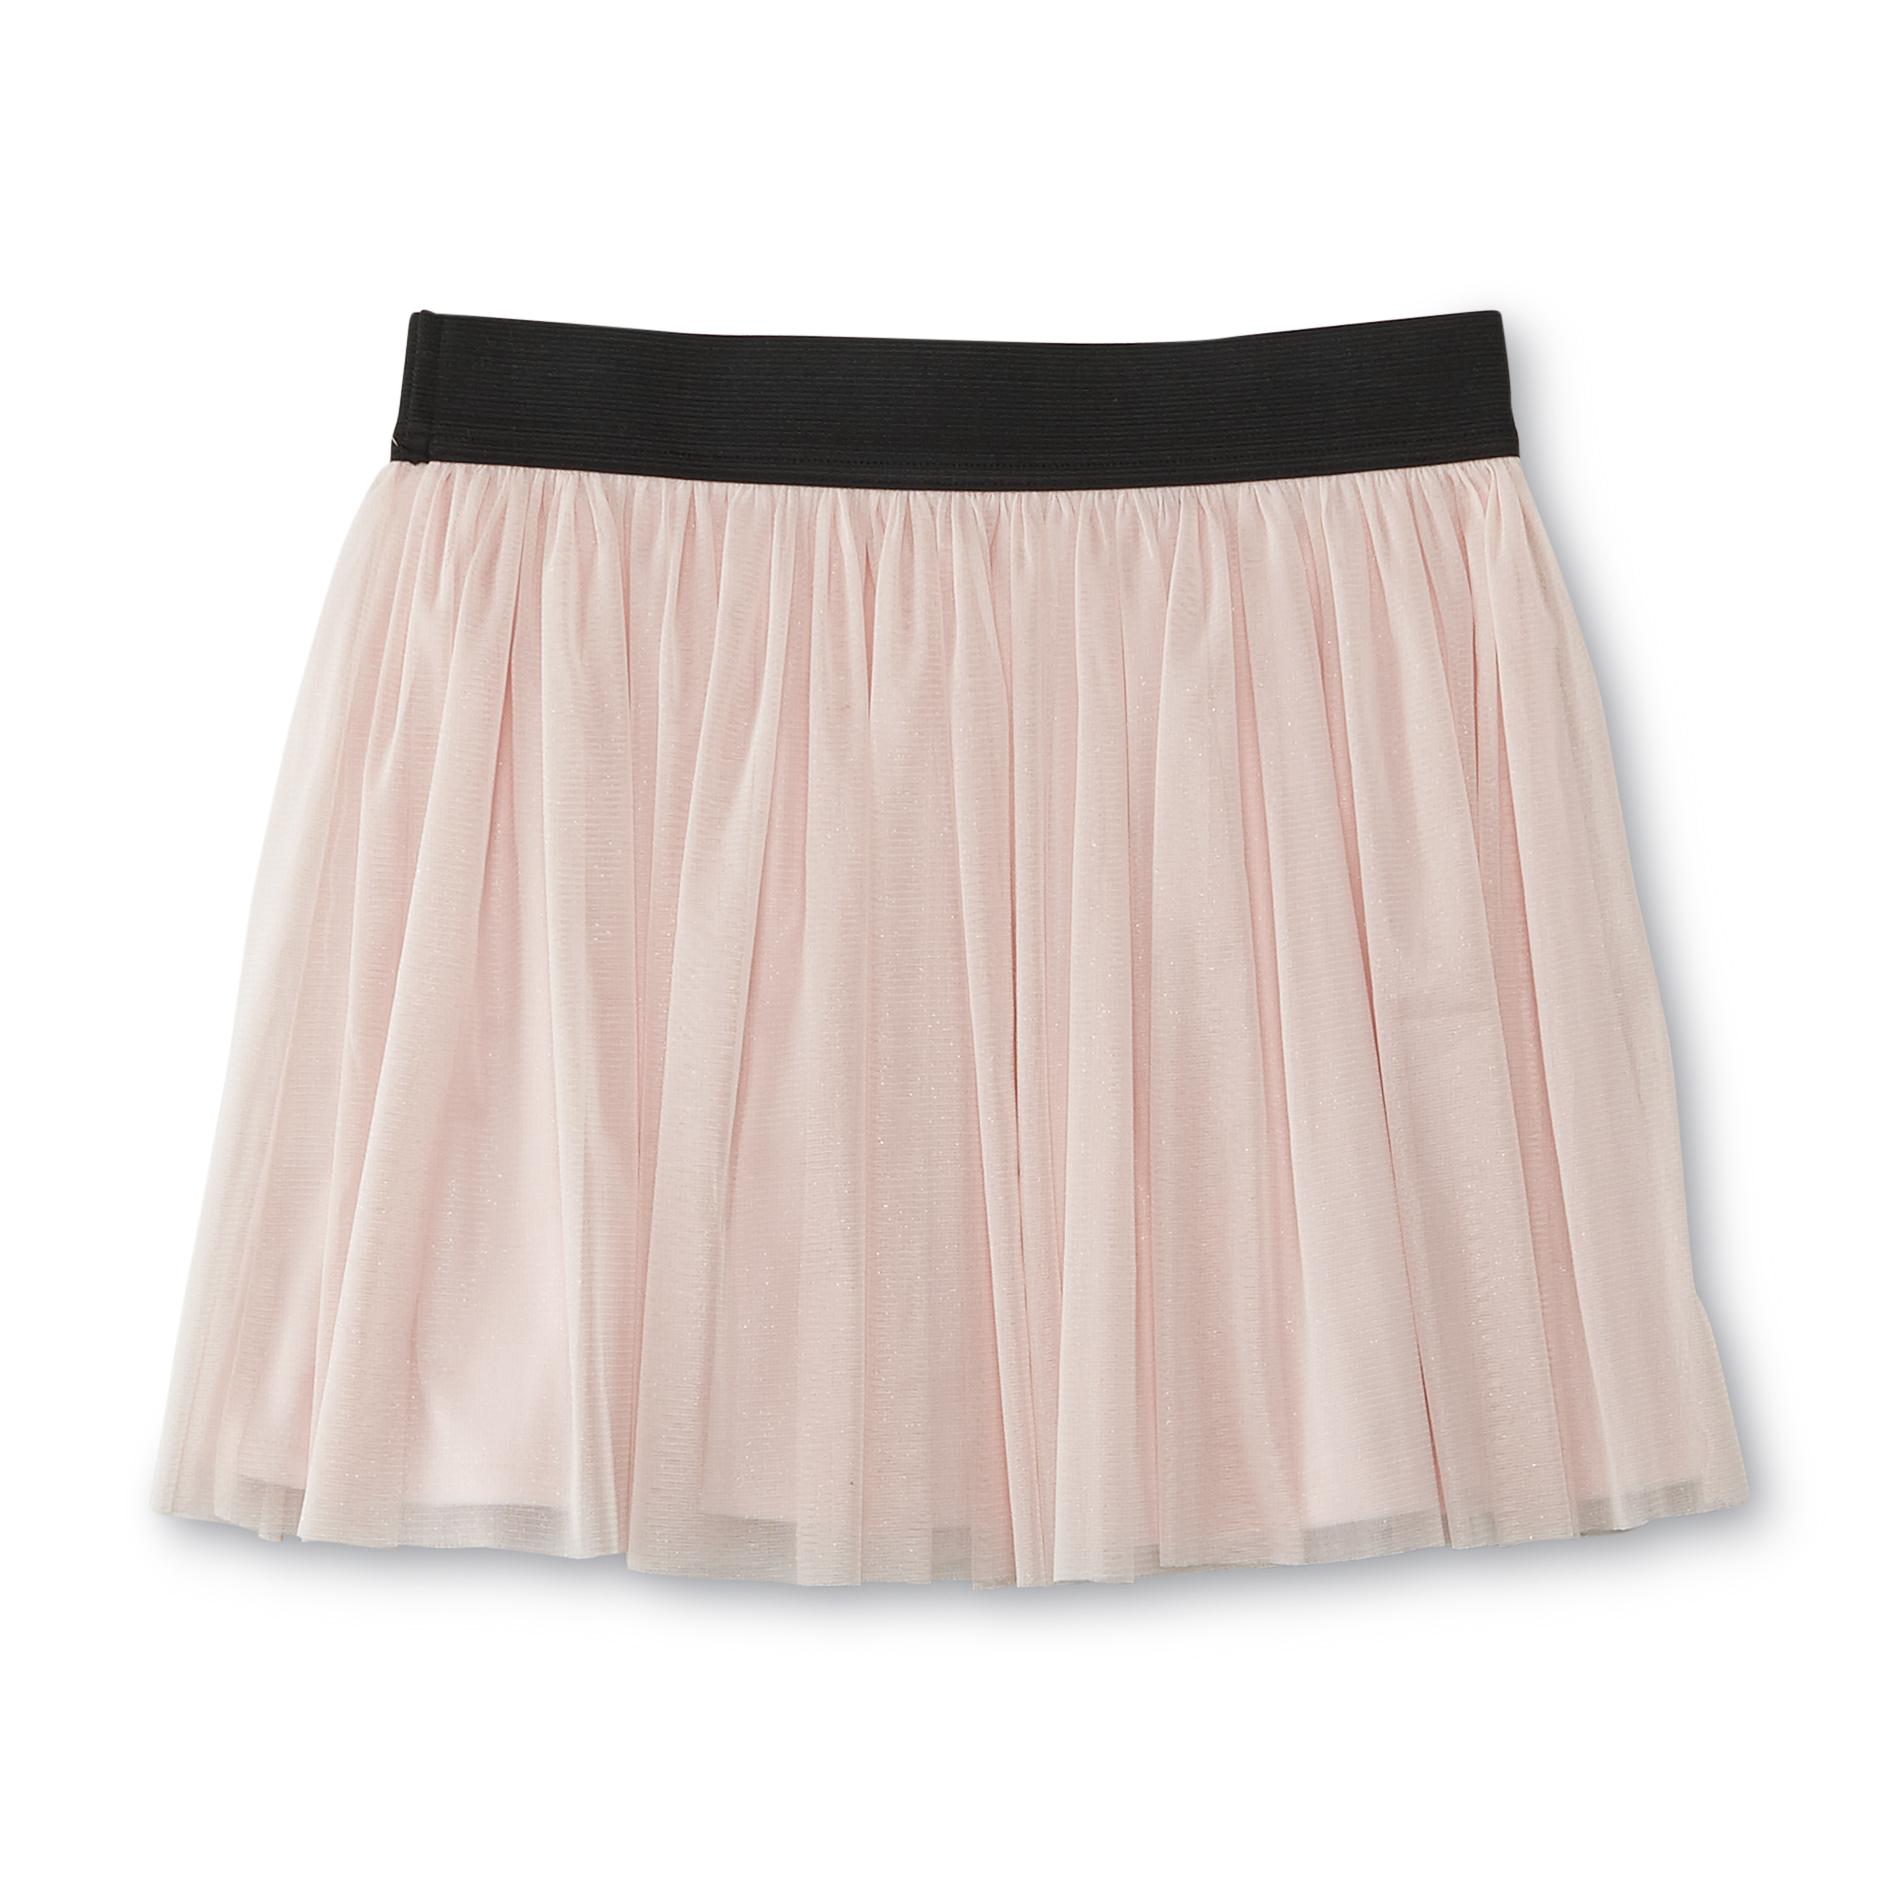 Bongo Girl's Tutu Skirt